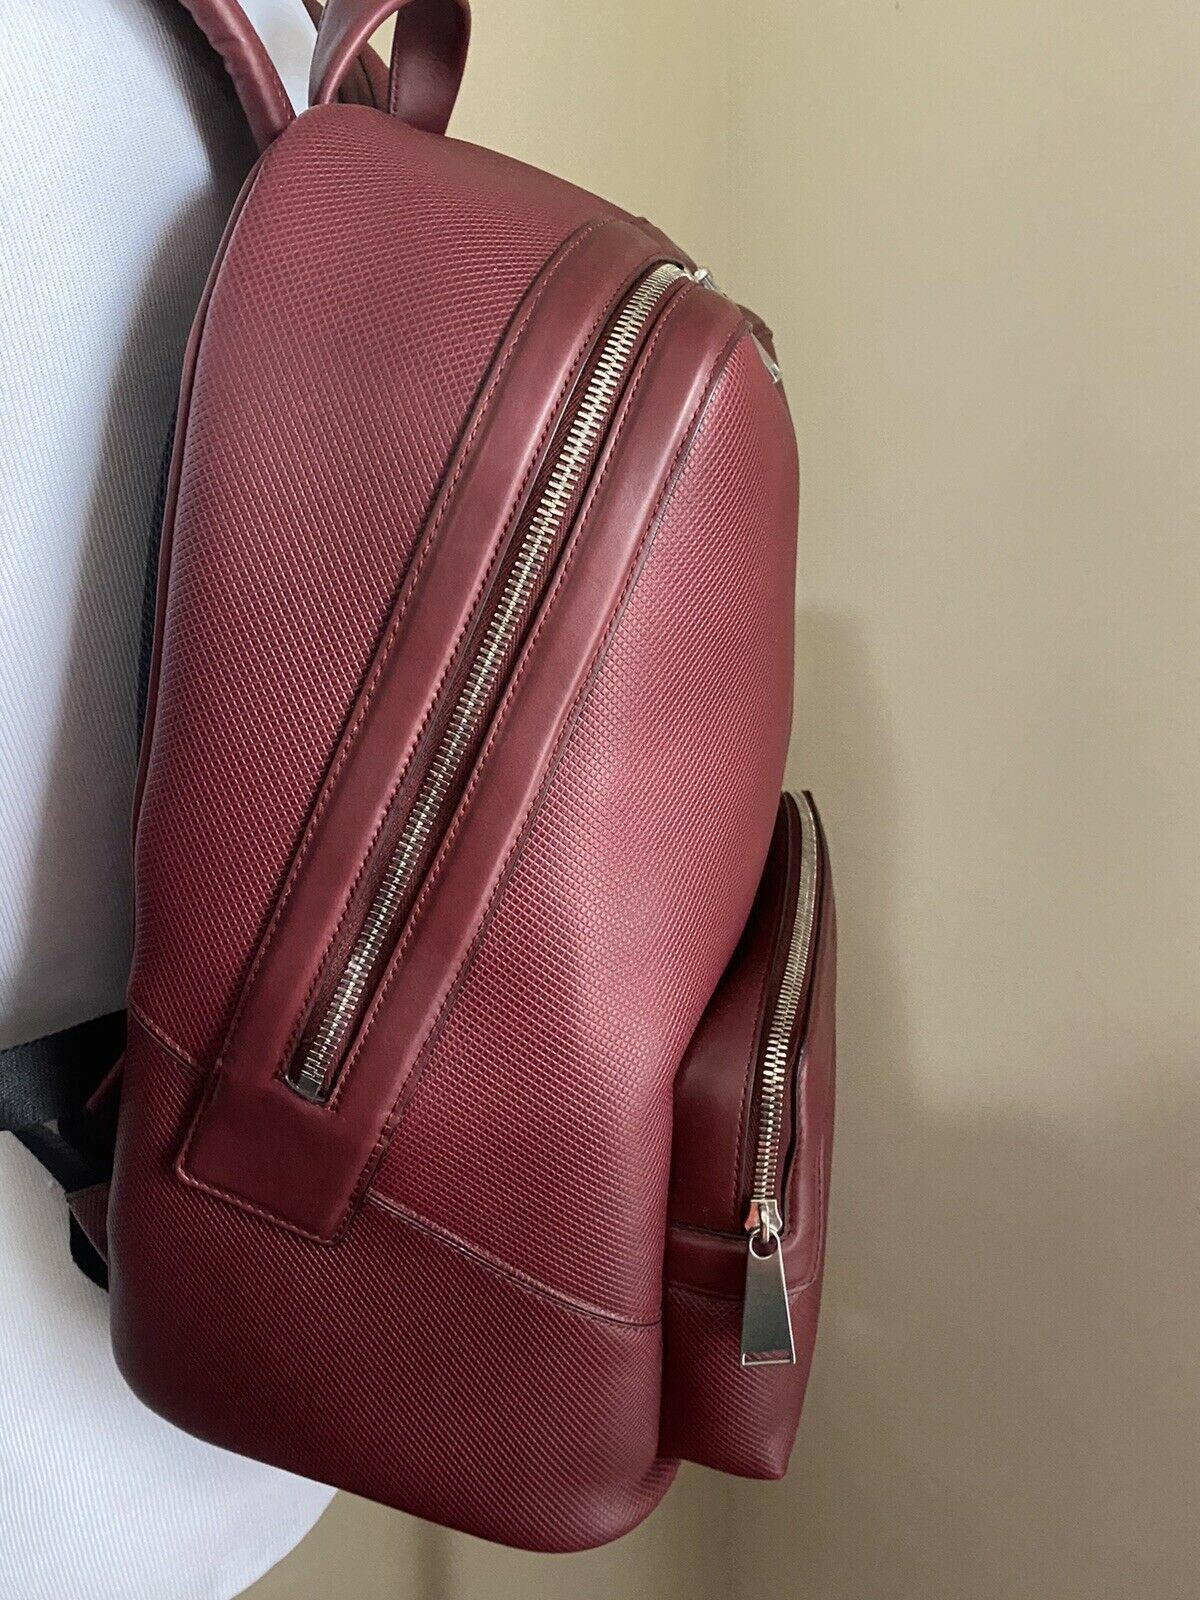 New $2550 Bottega Veneta leather Backpack Marco Polo 585931 Burgundy Italy